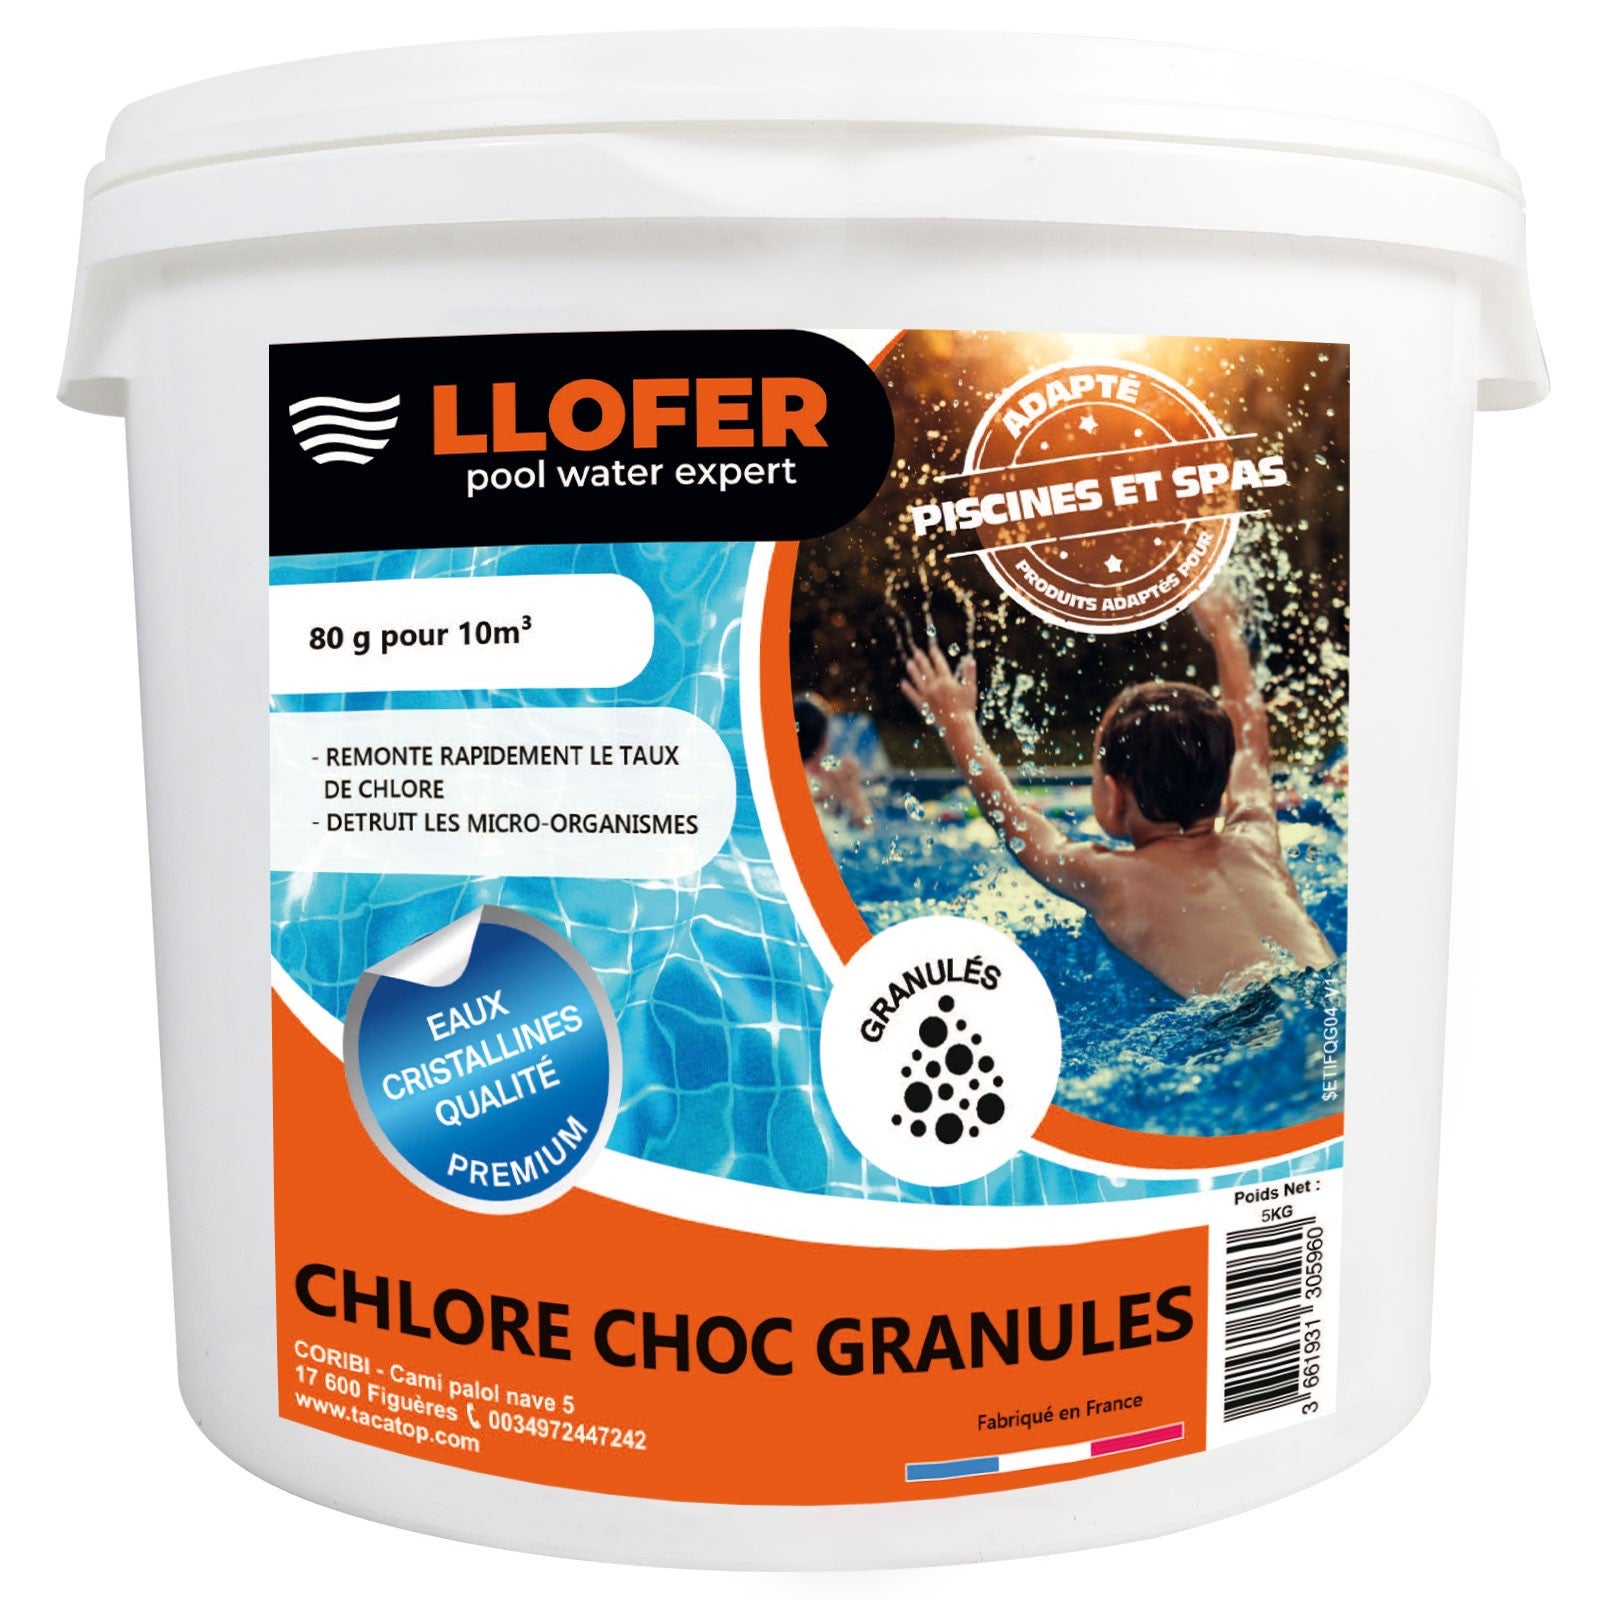 Chlore choc granules 5 kg - 1ER - Mr.Bricolage